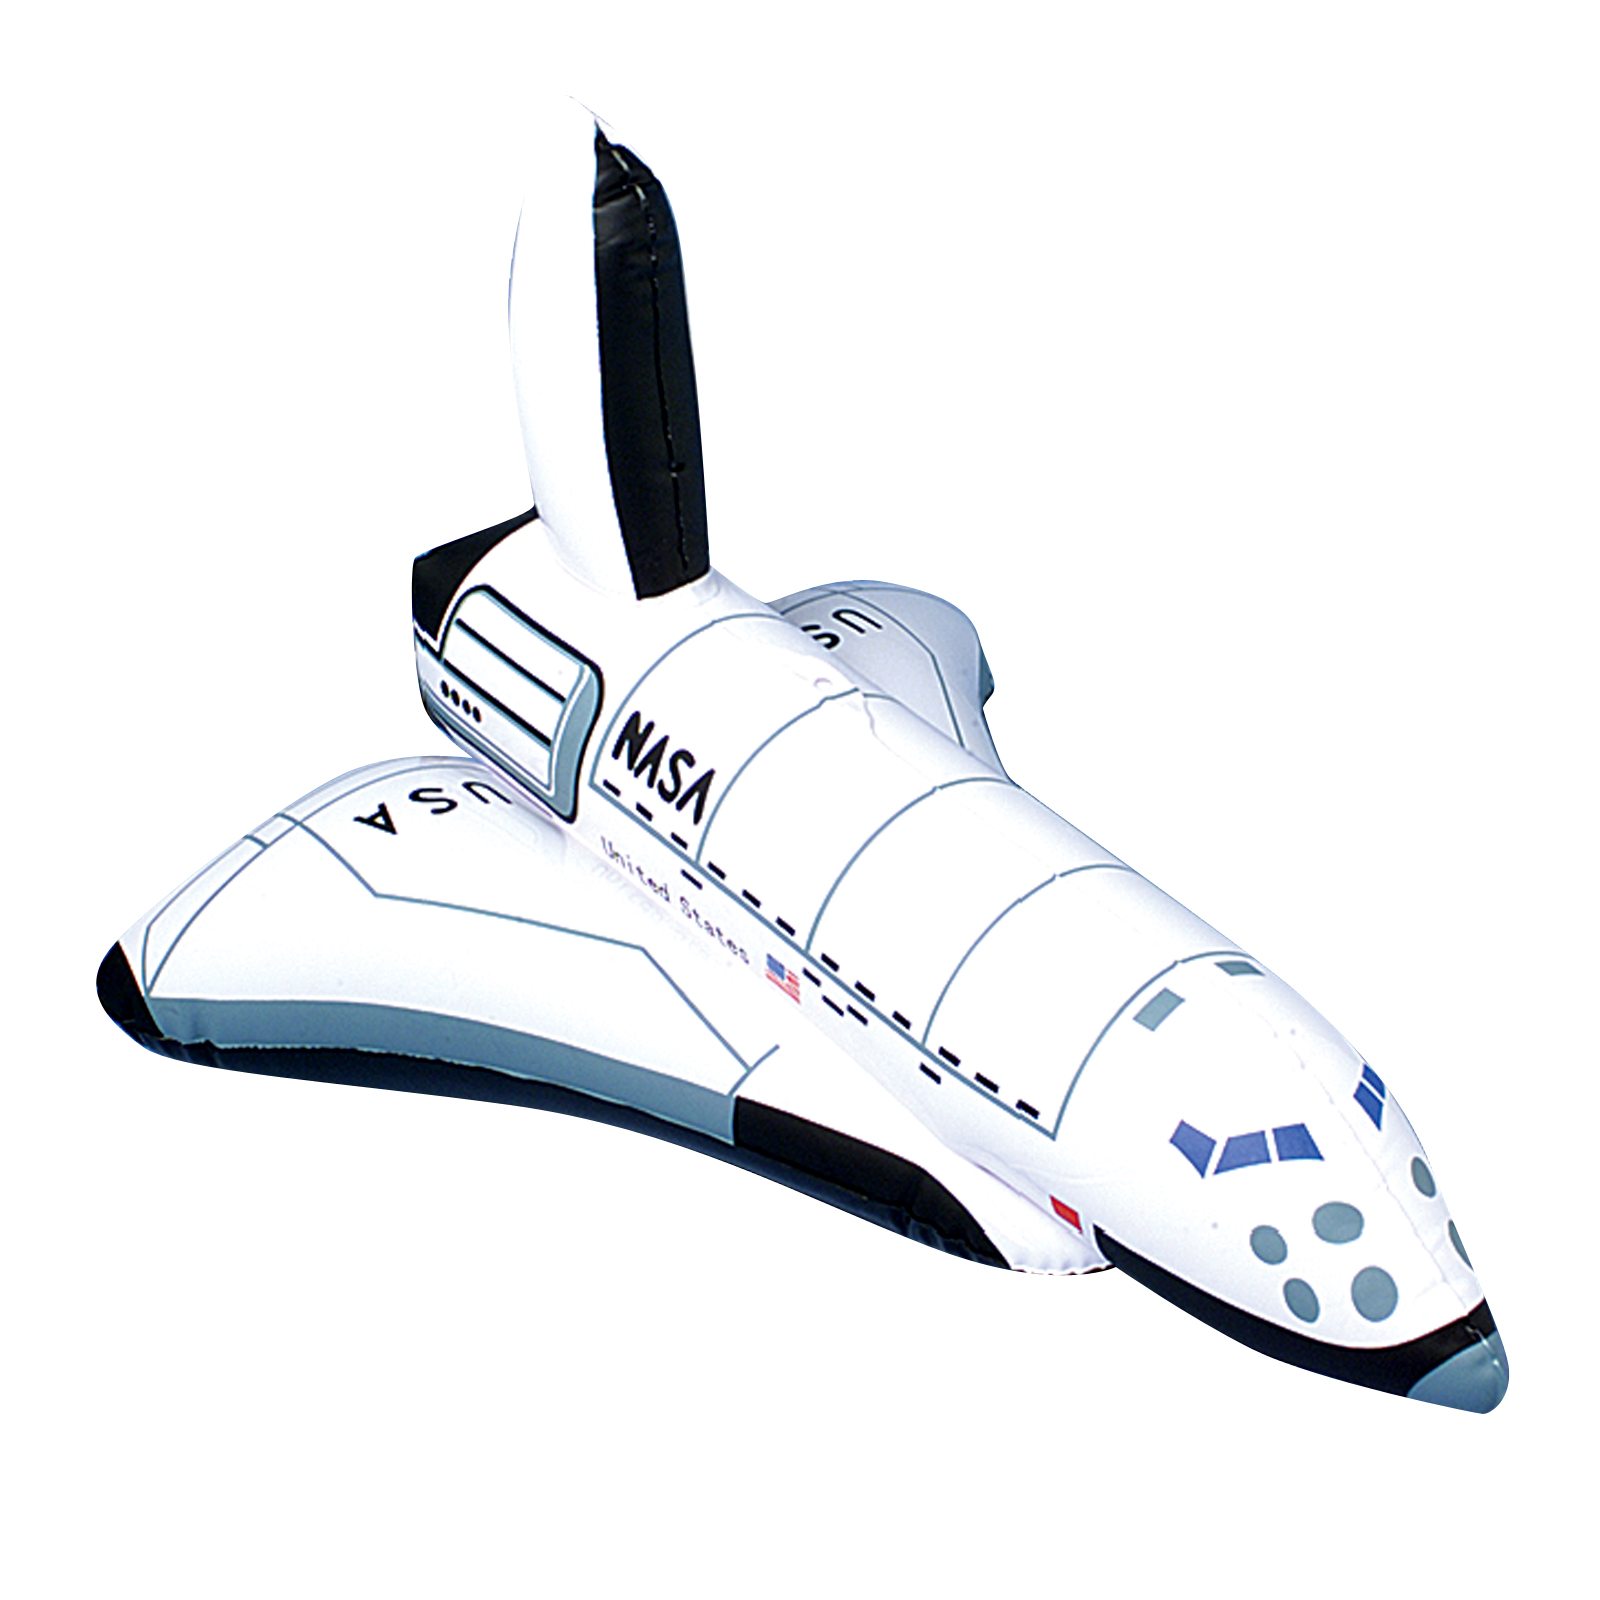 clipart space shuttle - photo #38